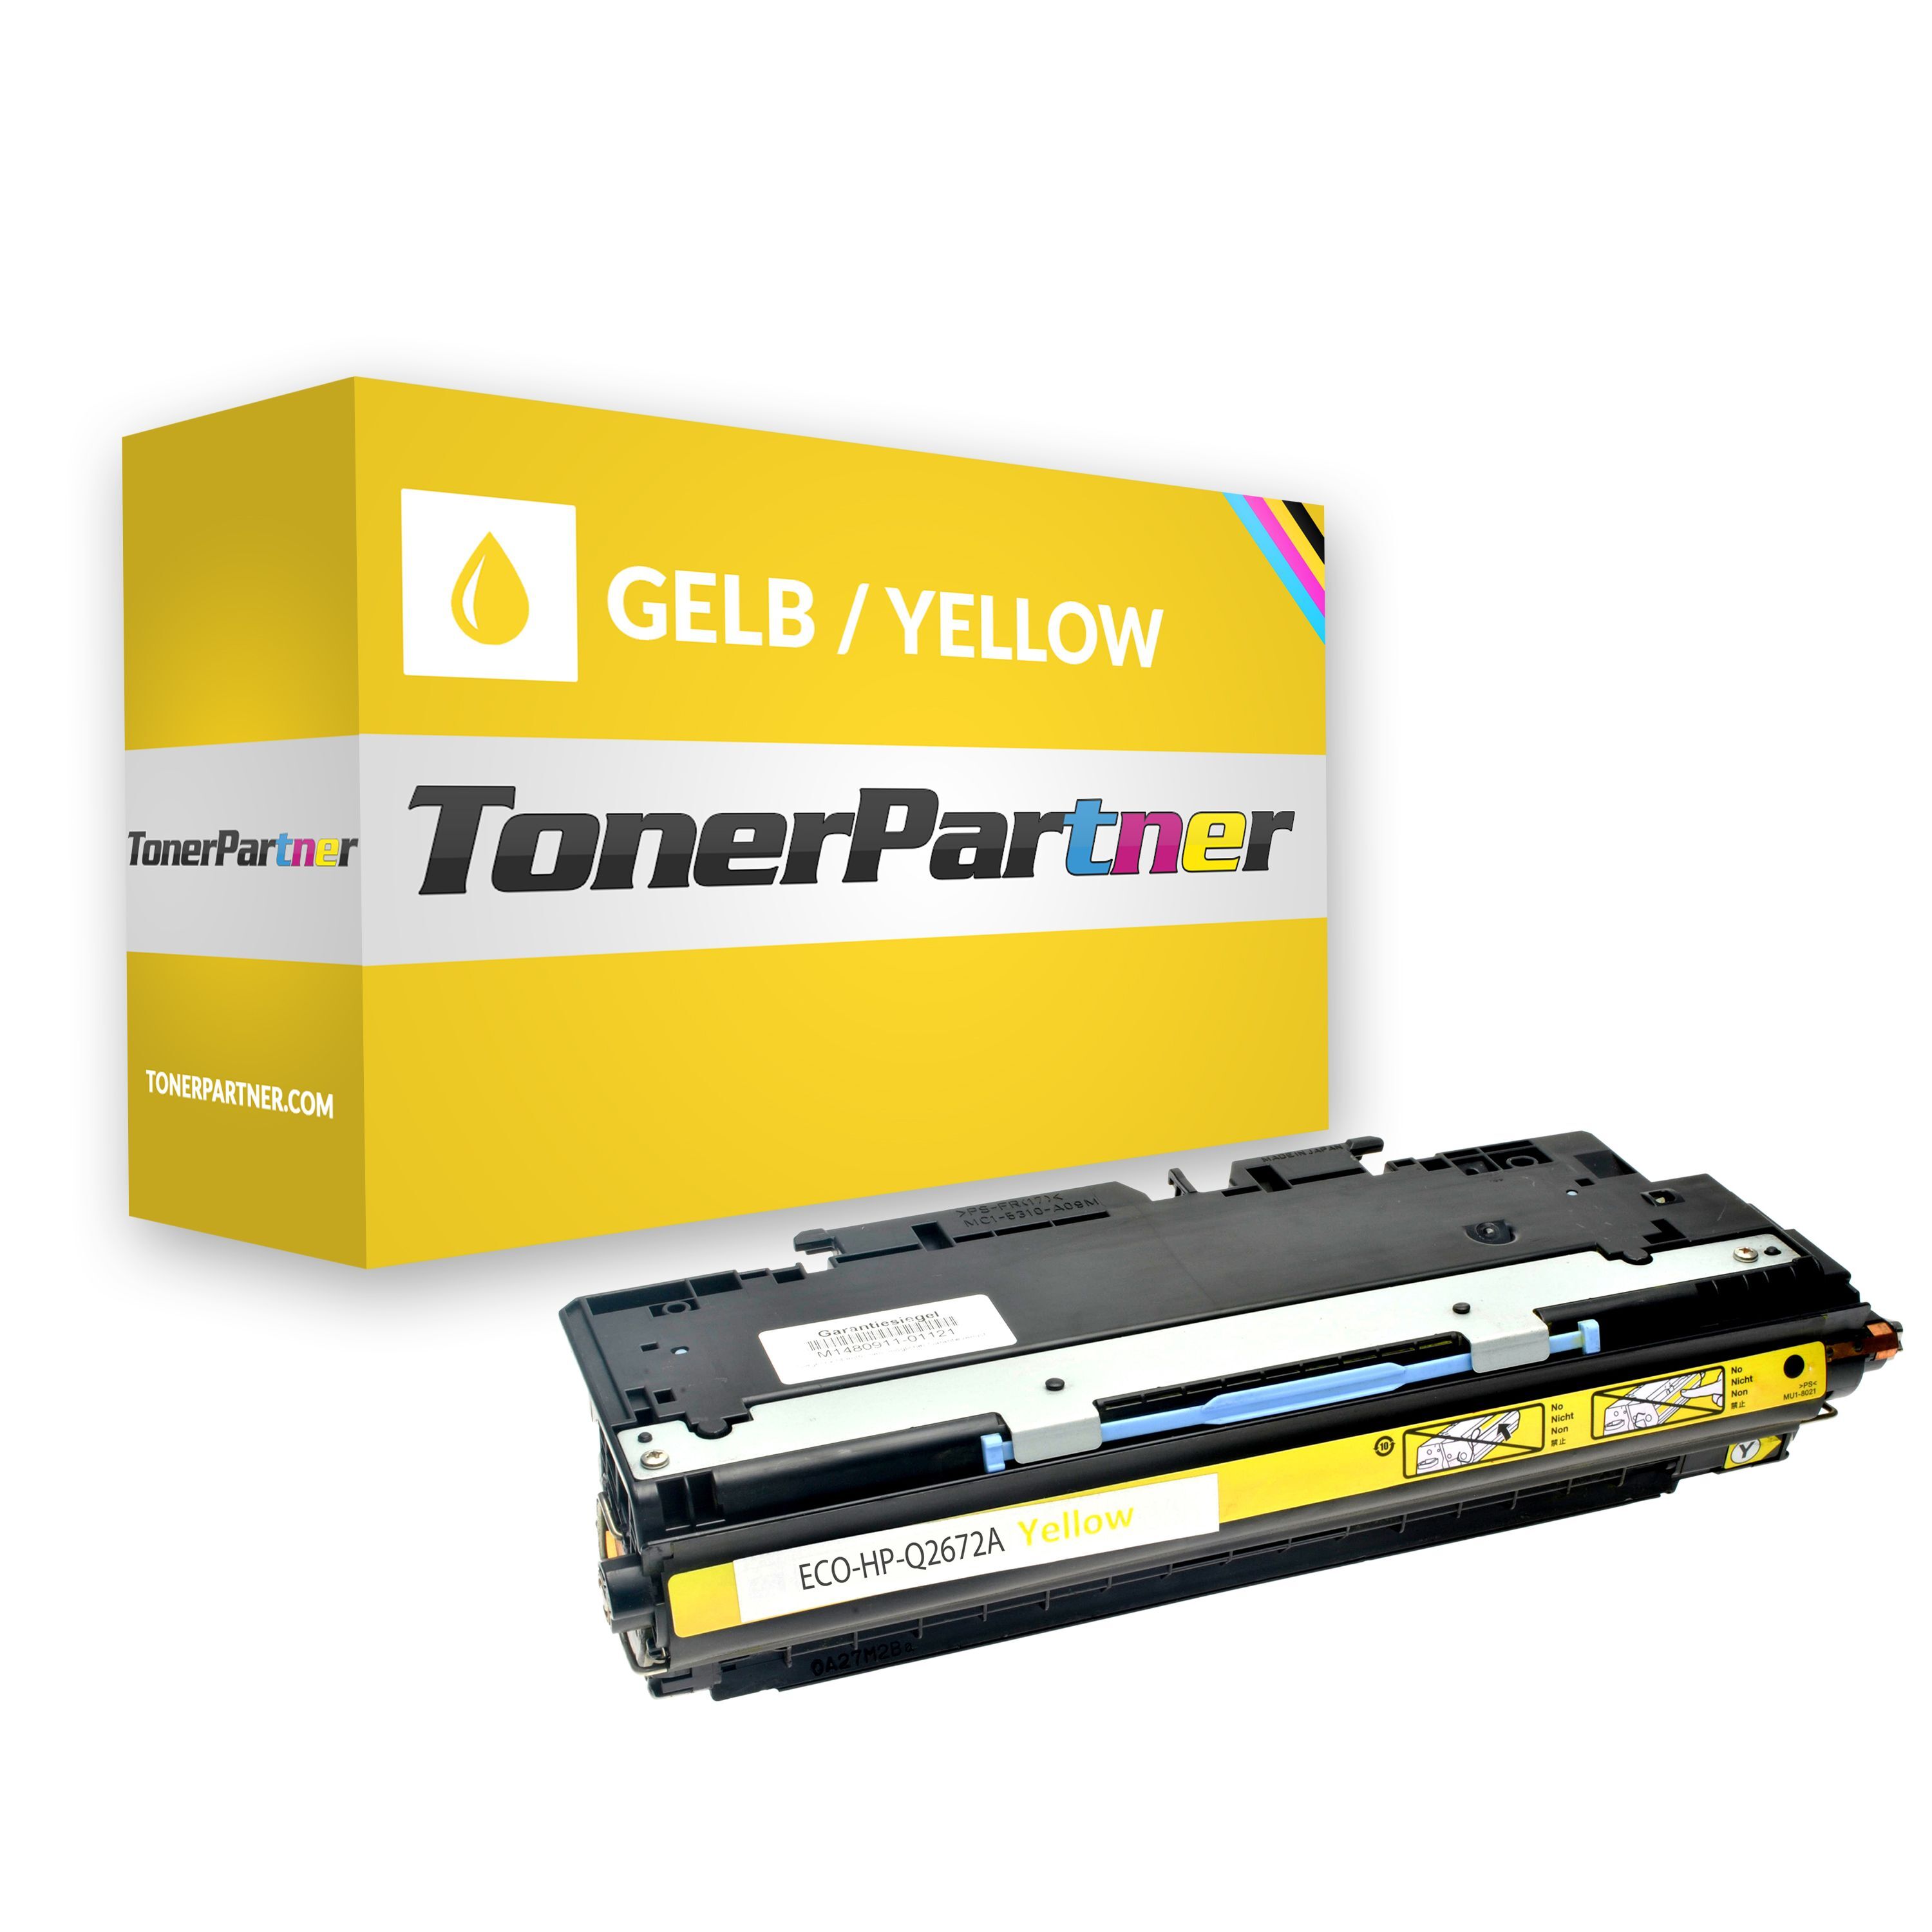 TonerPartner Kompatibel zu HP Color LaserJet 3550 Toner (309A / Q 2672 A) gelb, 4.000 Seiten, 1,07 Rp pro Seite von TonerPartner